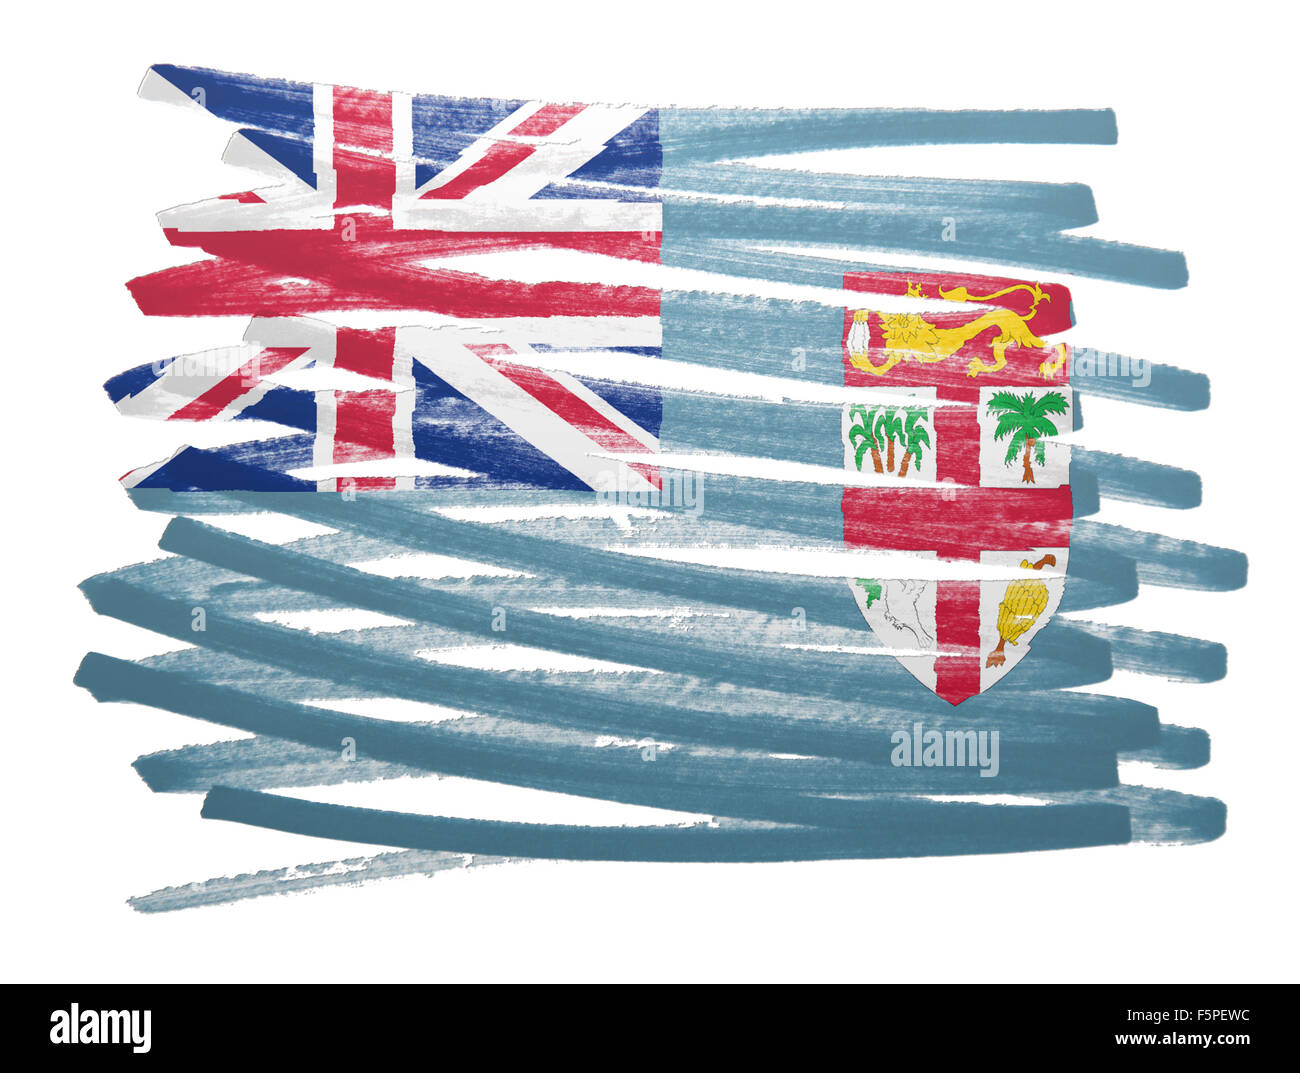 Flag illustration made with pen - Fiji Stock Photo